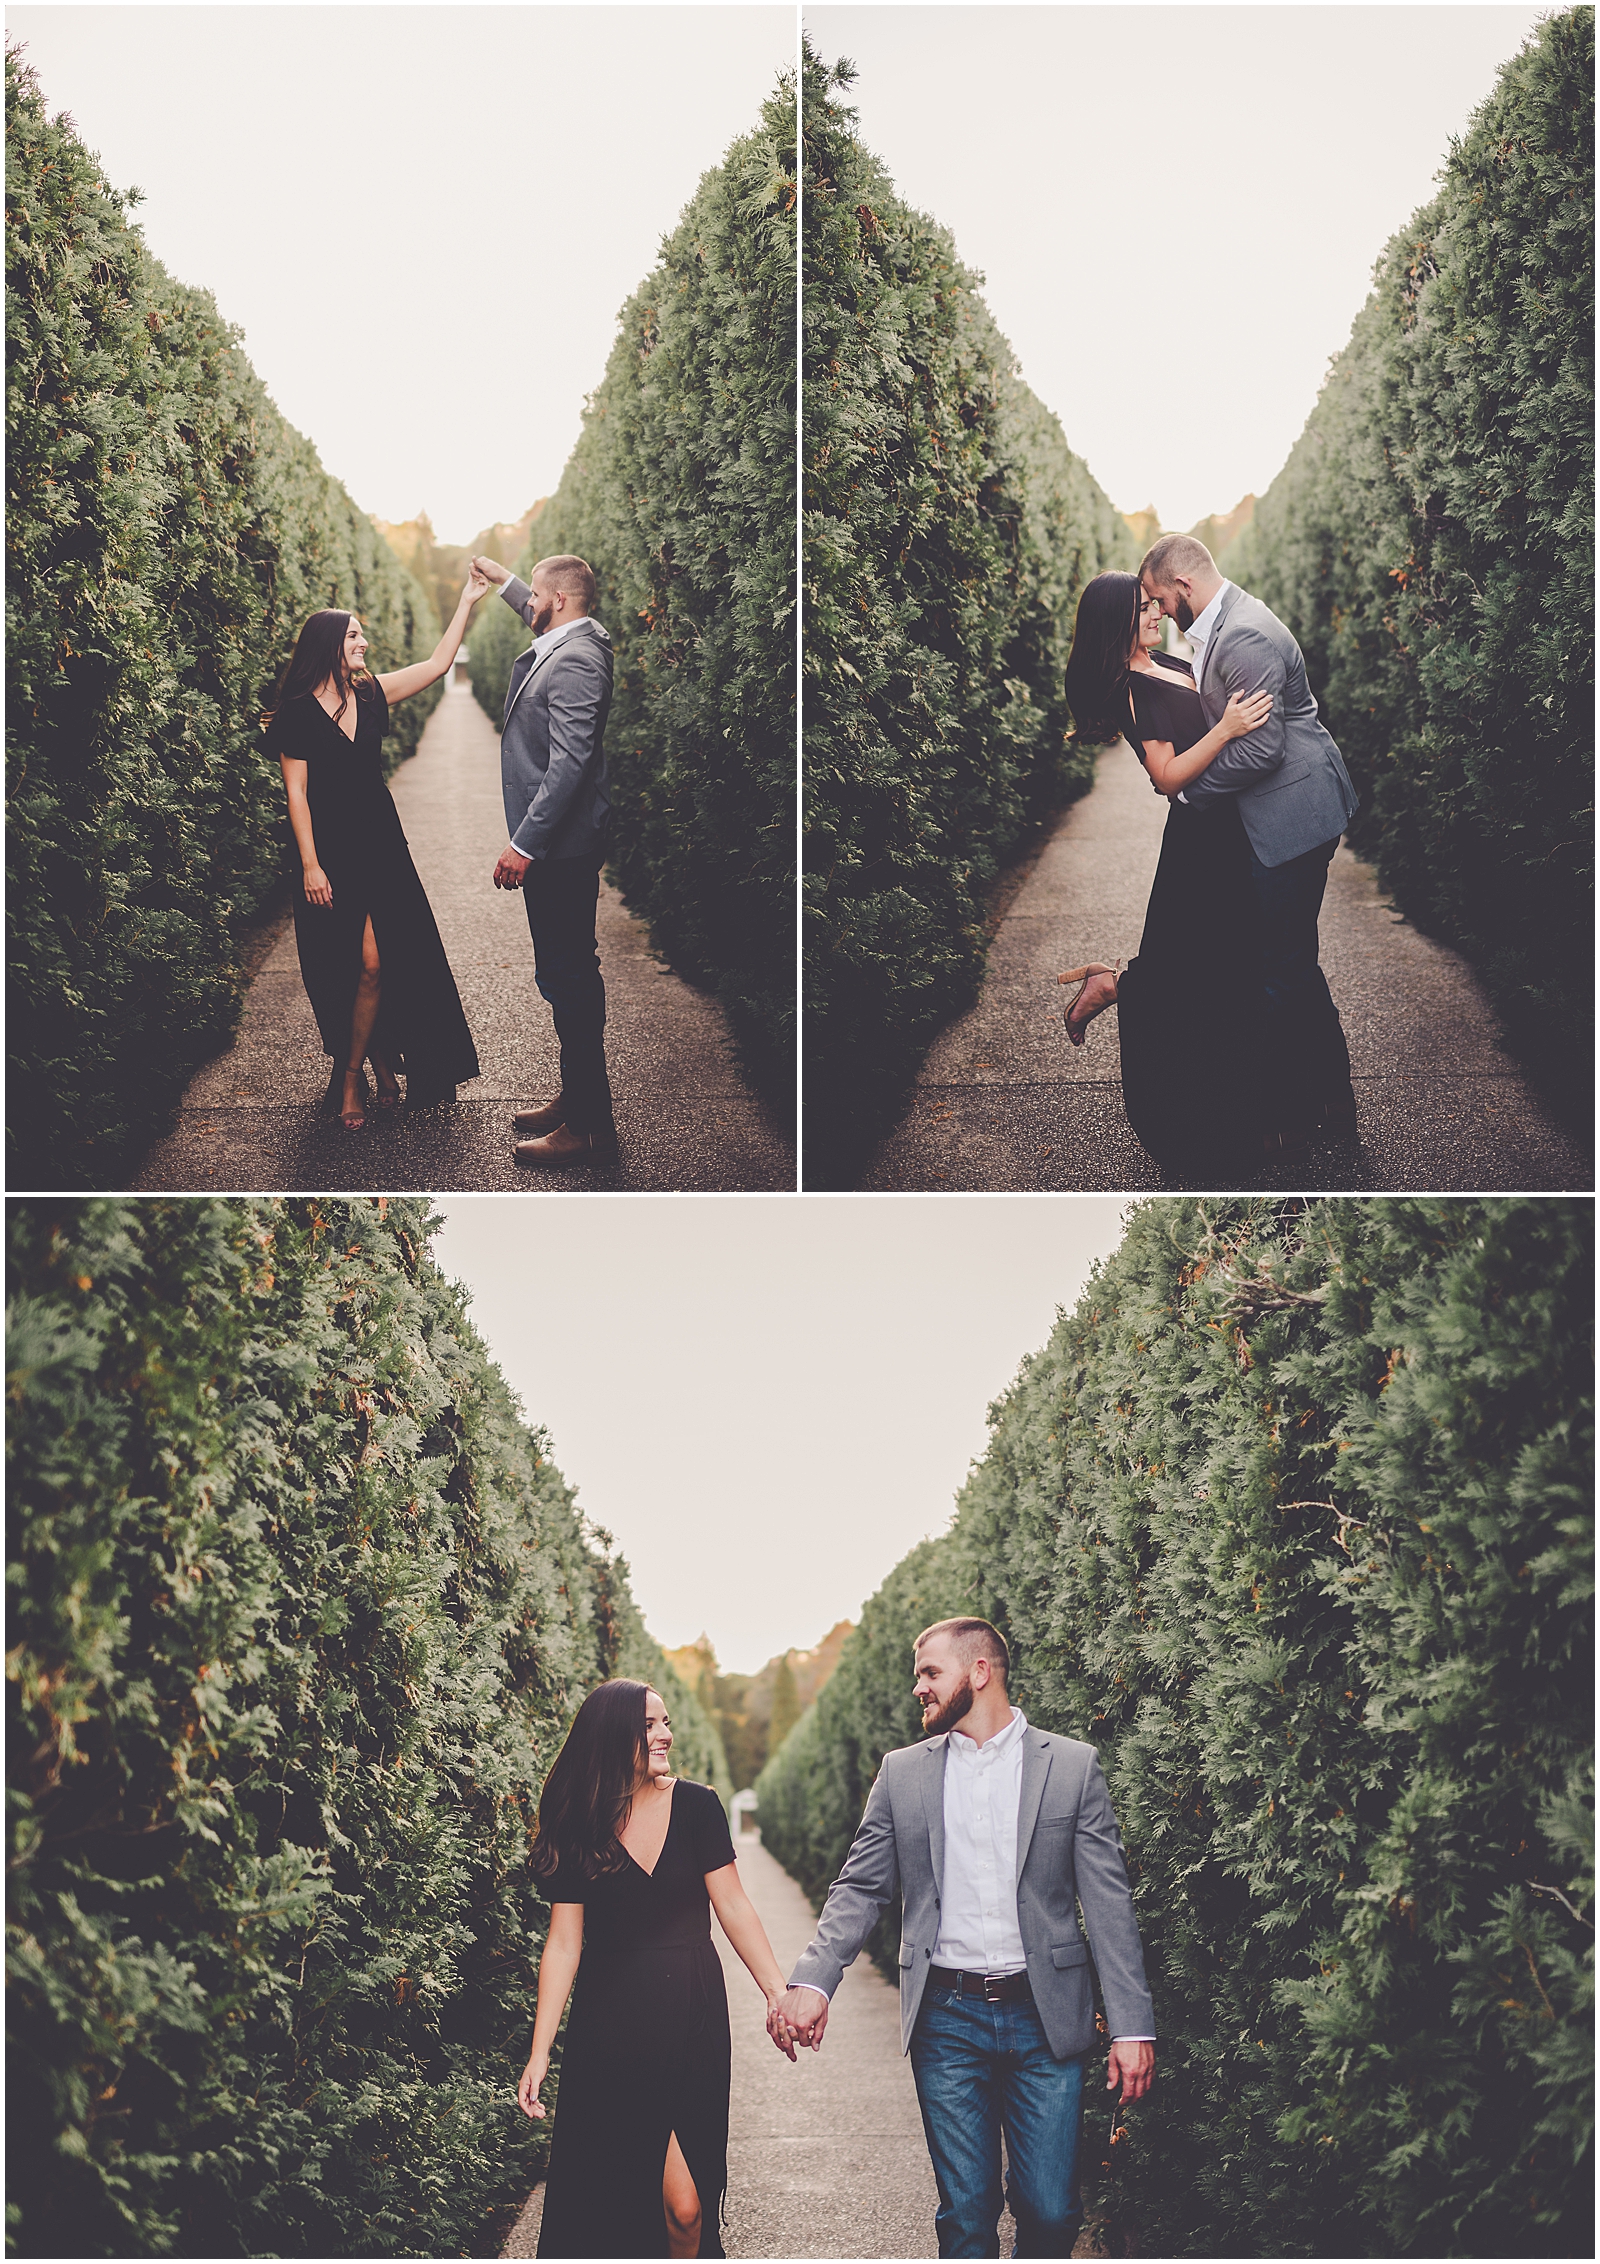 Lauren and Will's October Allerton Park & Retreat Center engagement in Monticello with Chicagoland wedding photog Kara Evans Photographer.